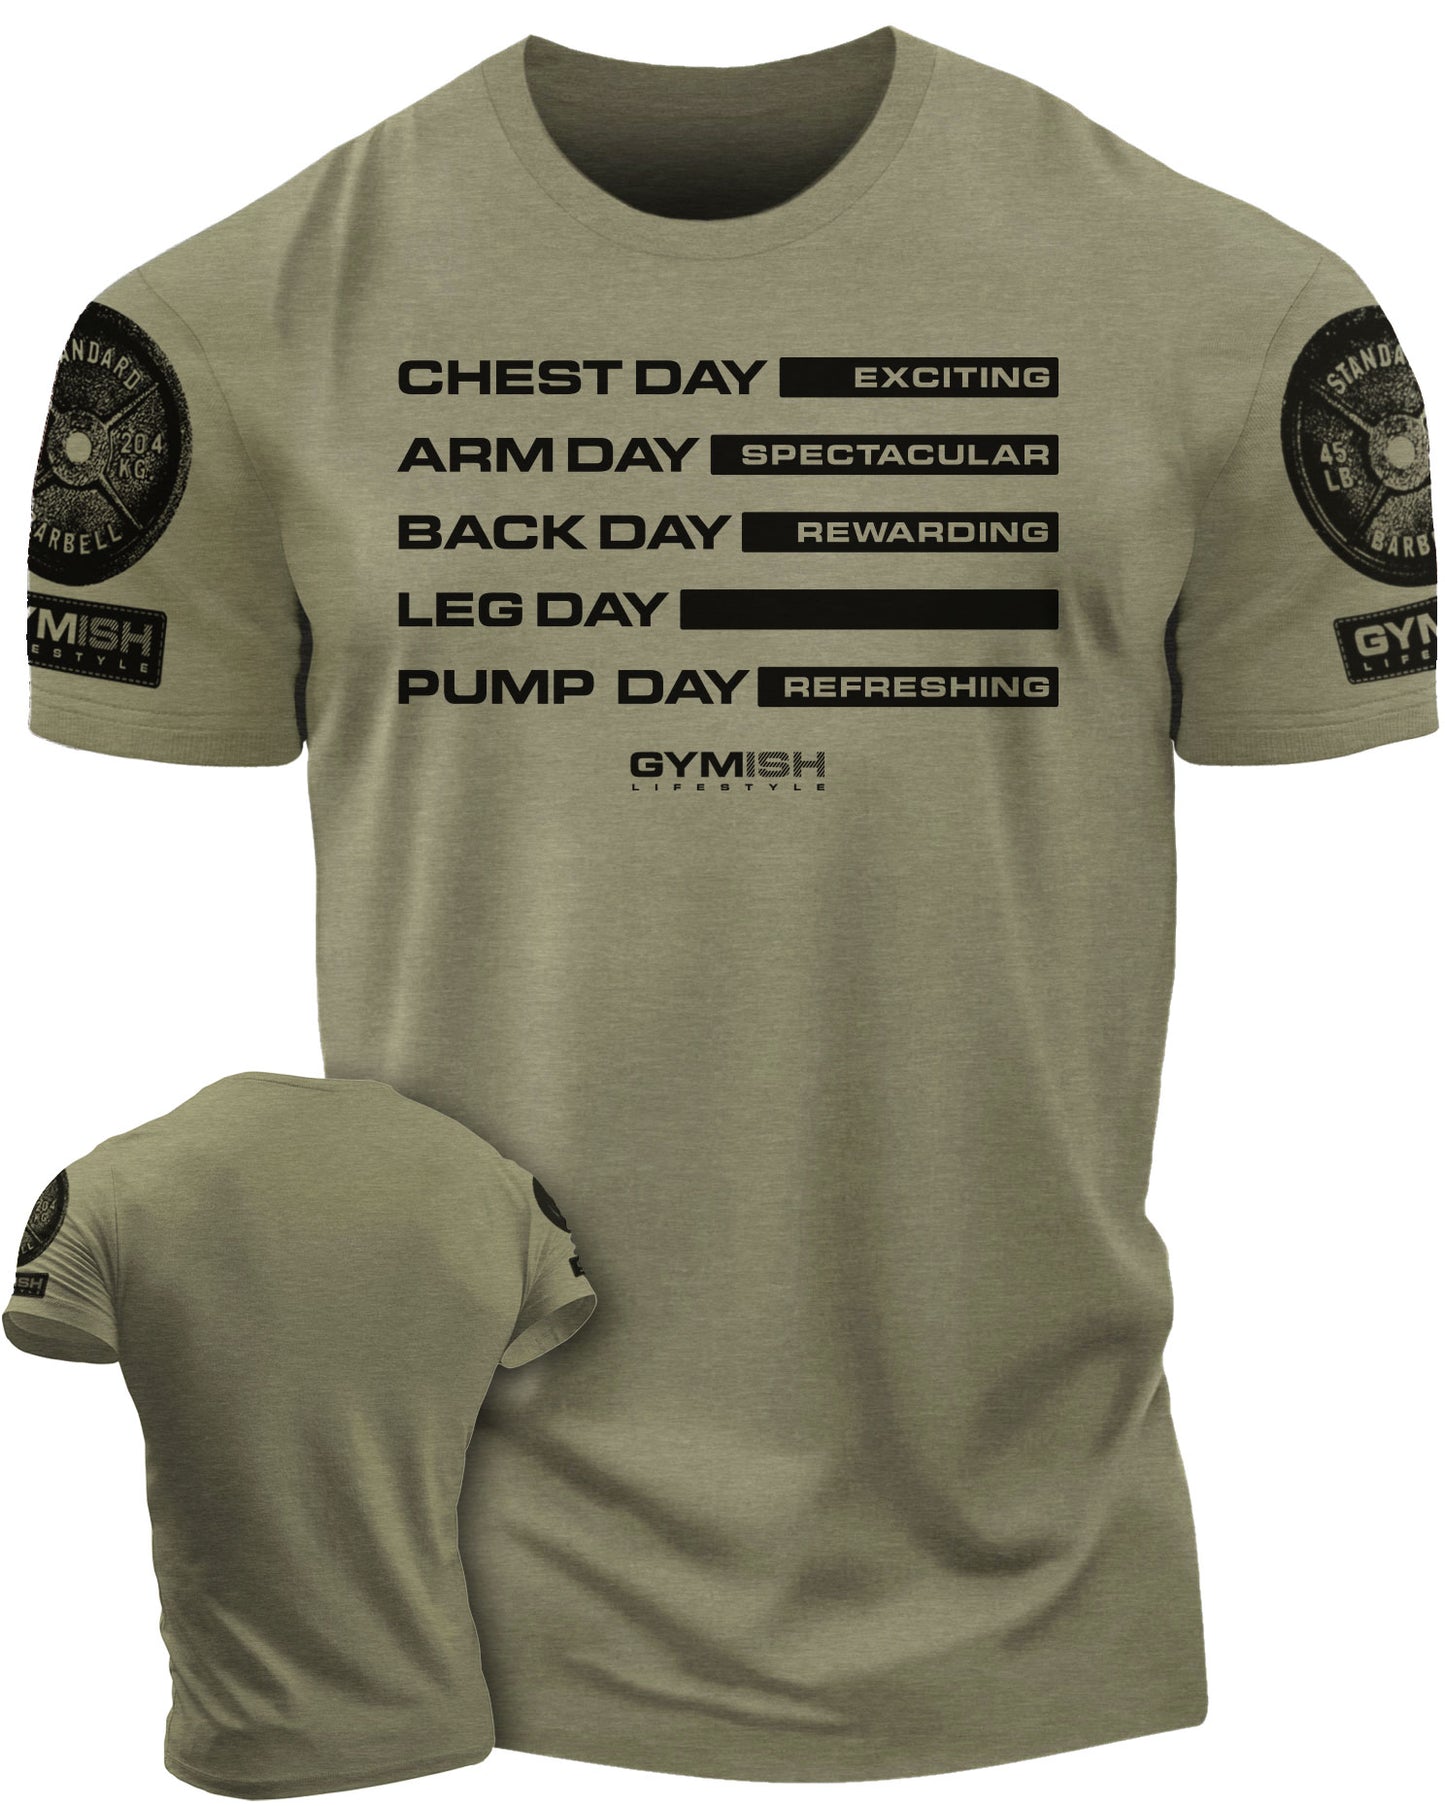 054. GYM DAYS LEG DAY Workout T-Shirt